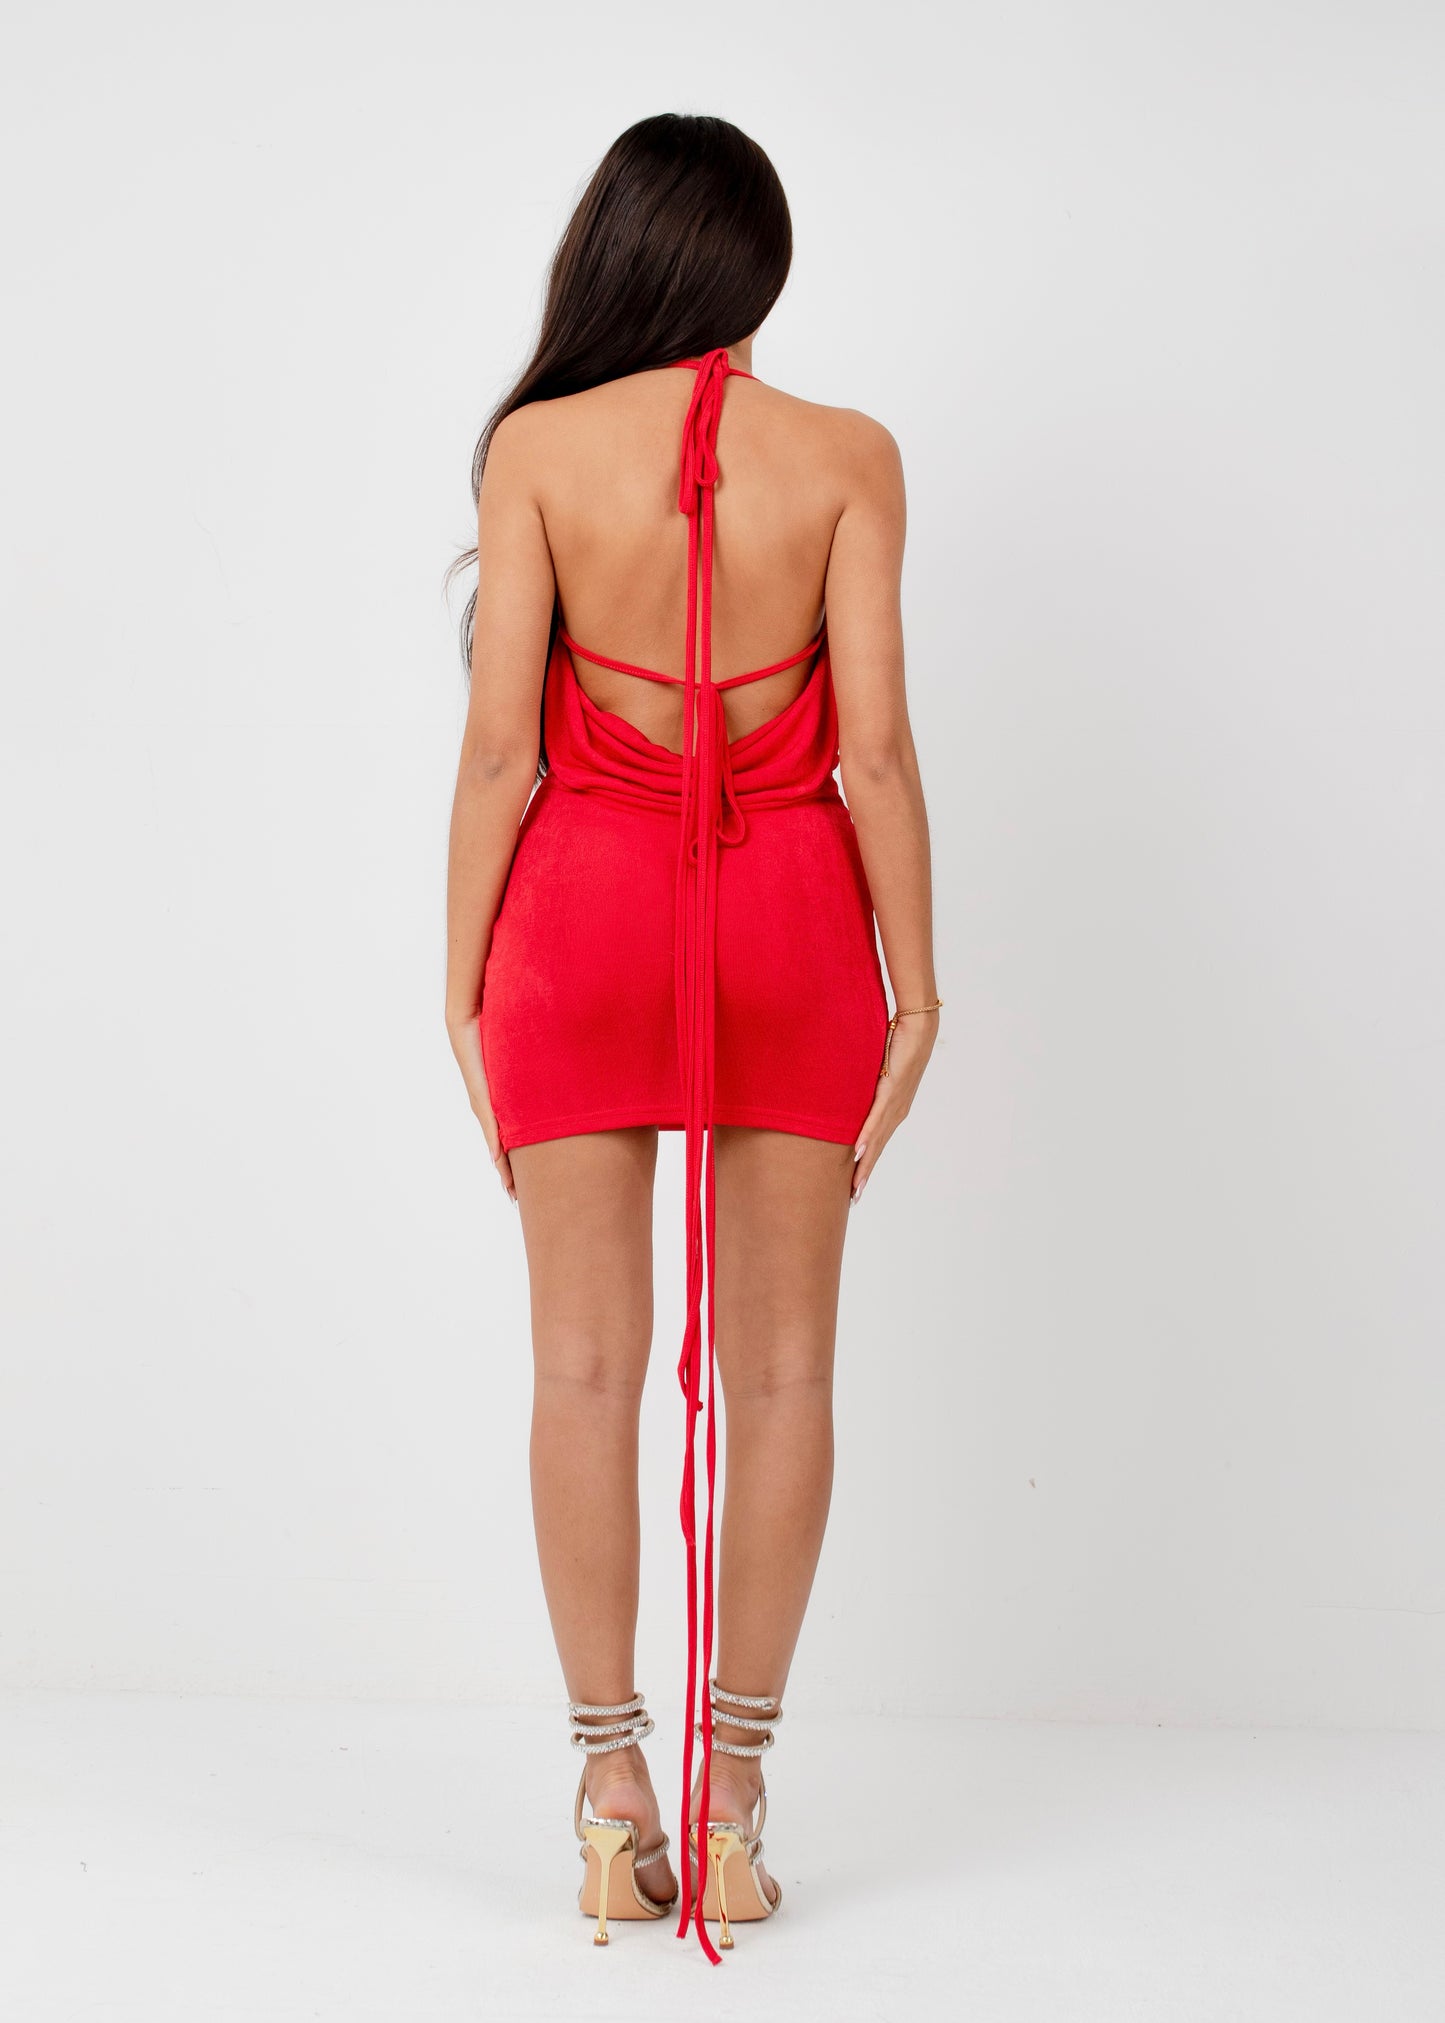 CAMILLA - Red Mini Dress